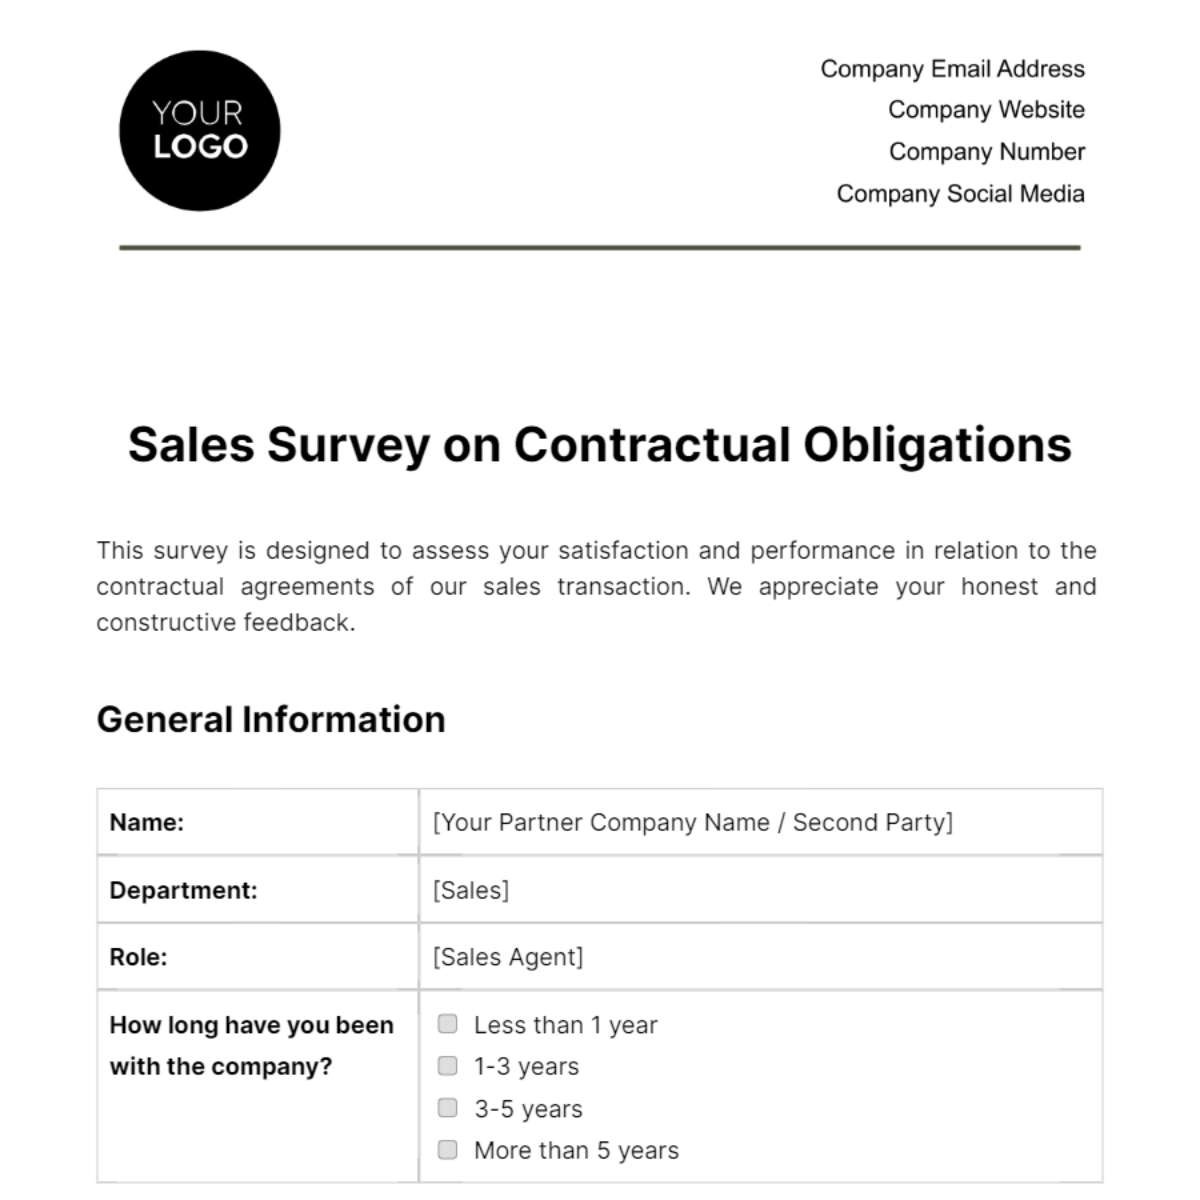 Sales Survey on Contractual Obligations Template